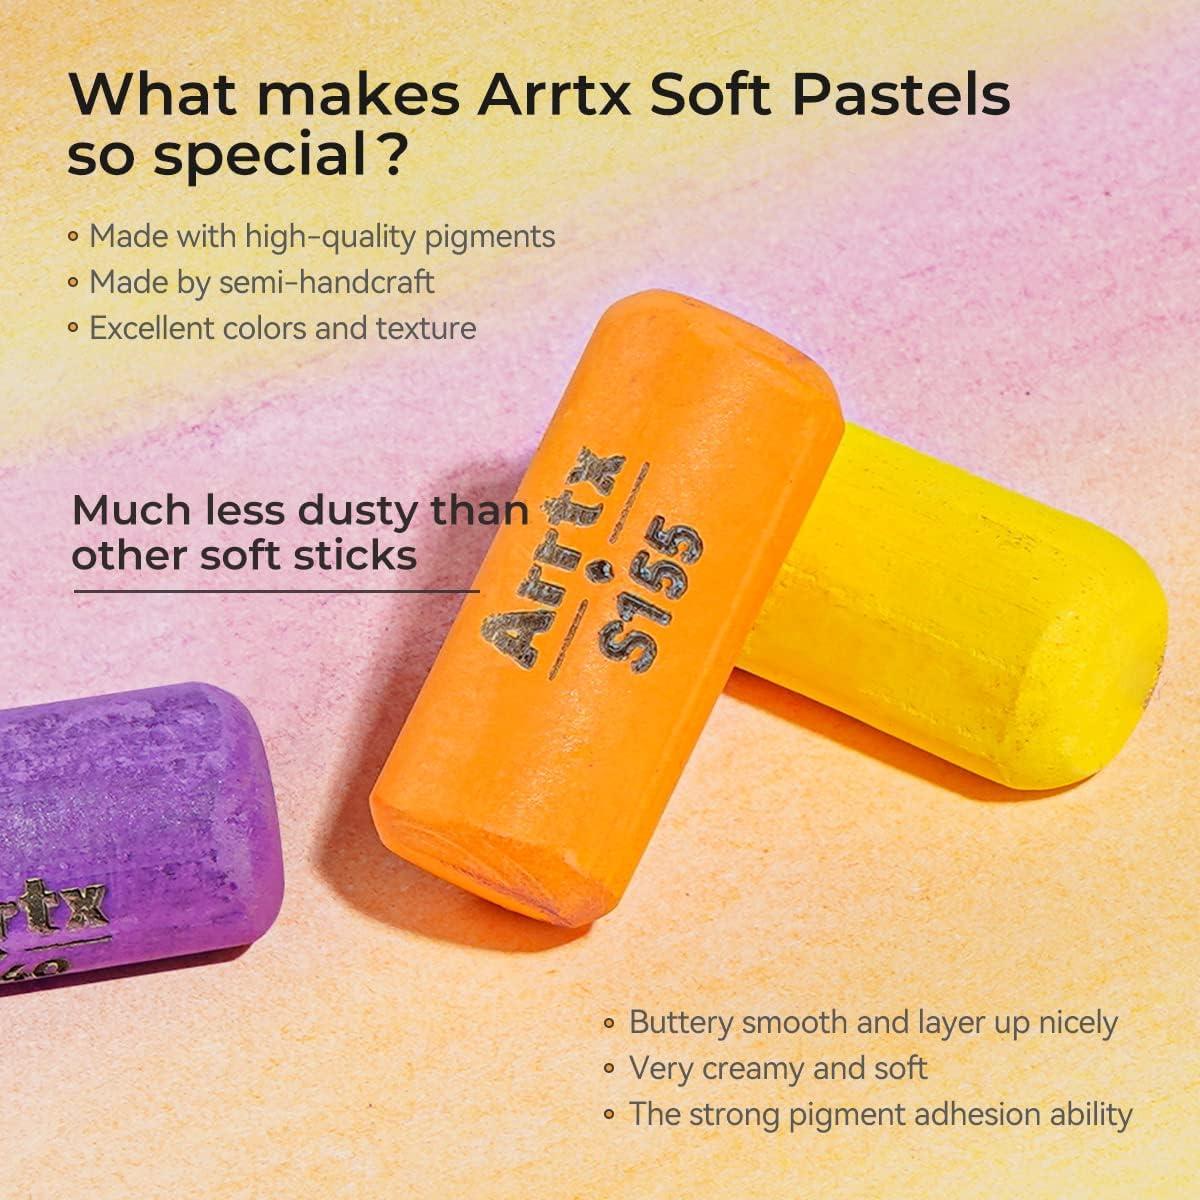 Arrtx 72 Vivid Colors Soft Oil Pastel Pencils Professional Oil Pastel  Crayons for Drawing Artist Art Supplies